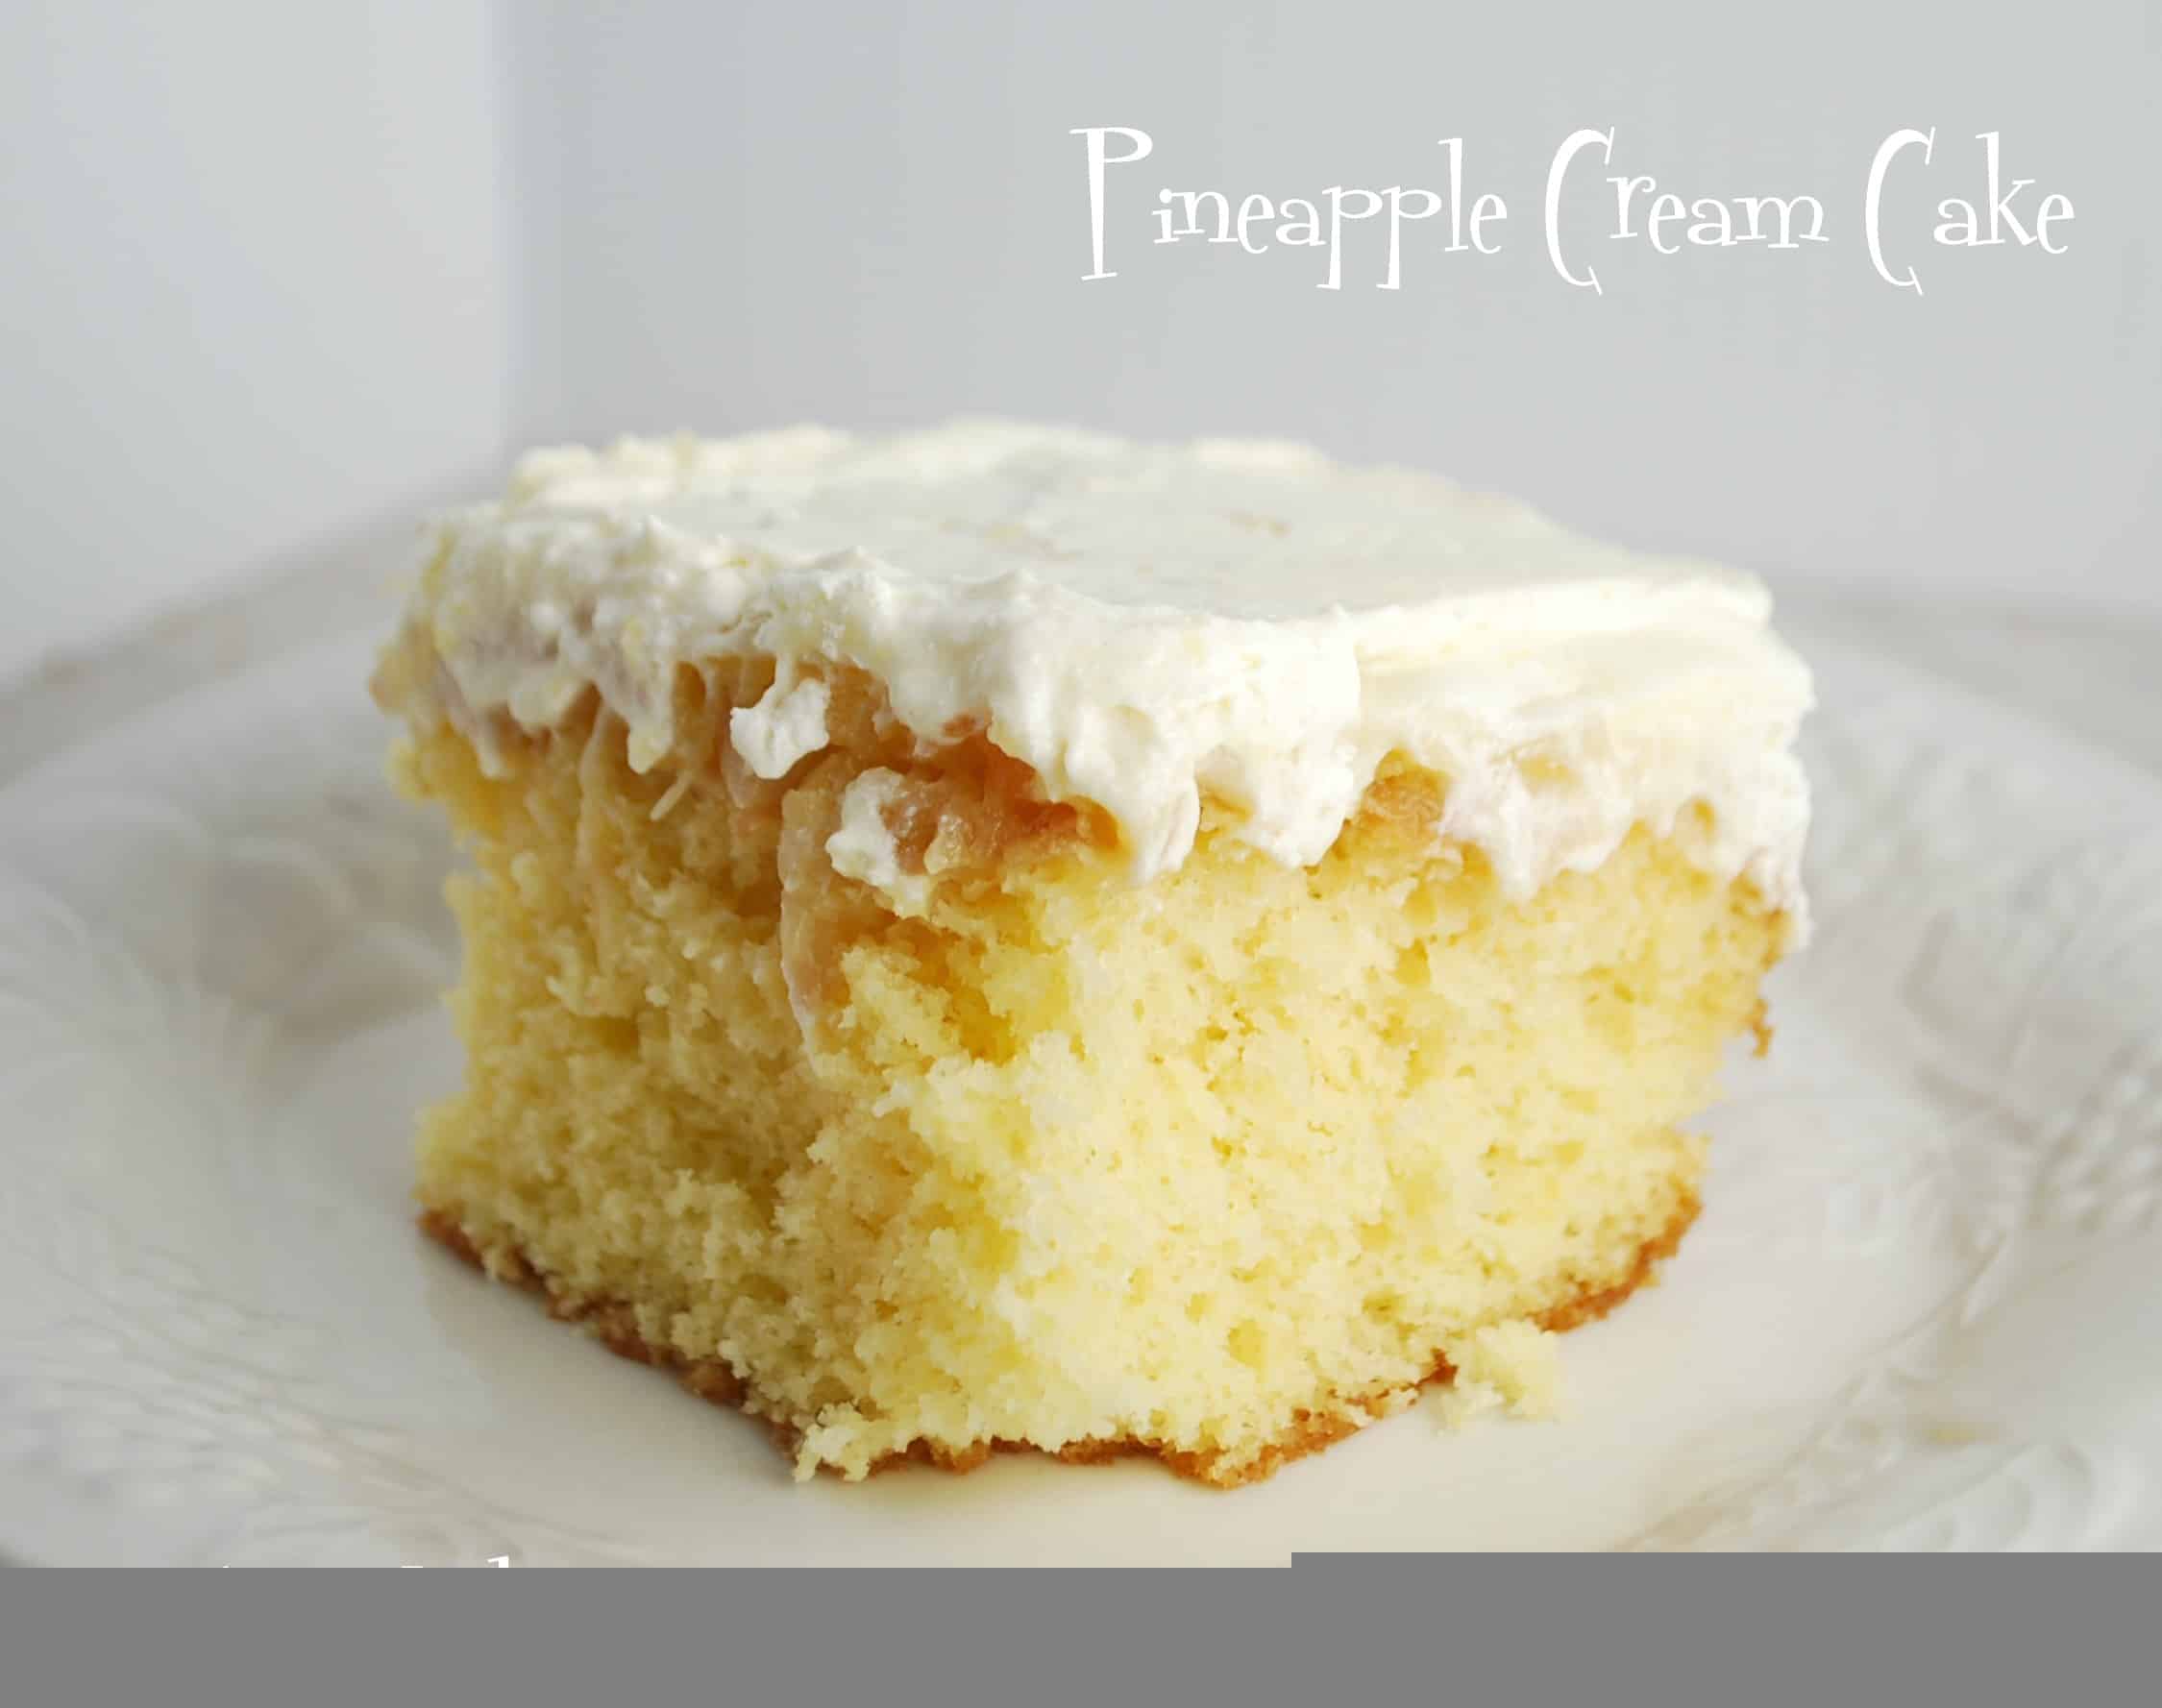 pineapple cream cake 002 - Creations by Kara